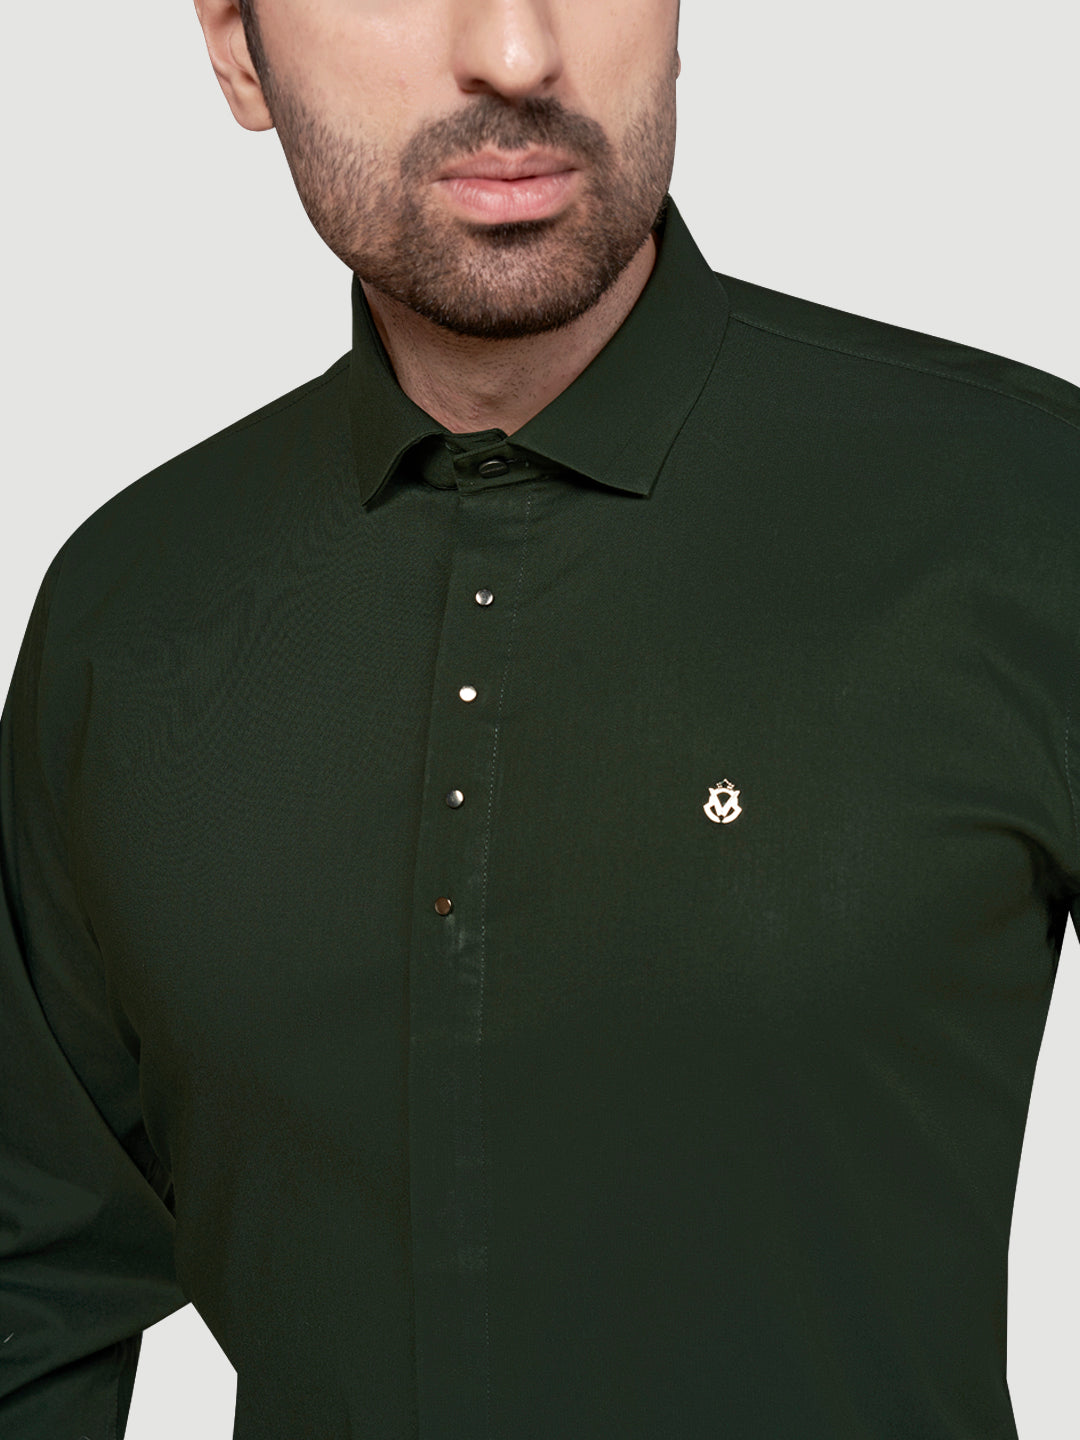 Black & White Designer Shirts with Shimmer Buttons Bottle Green